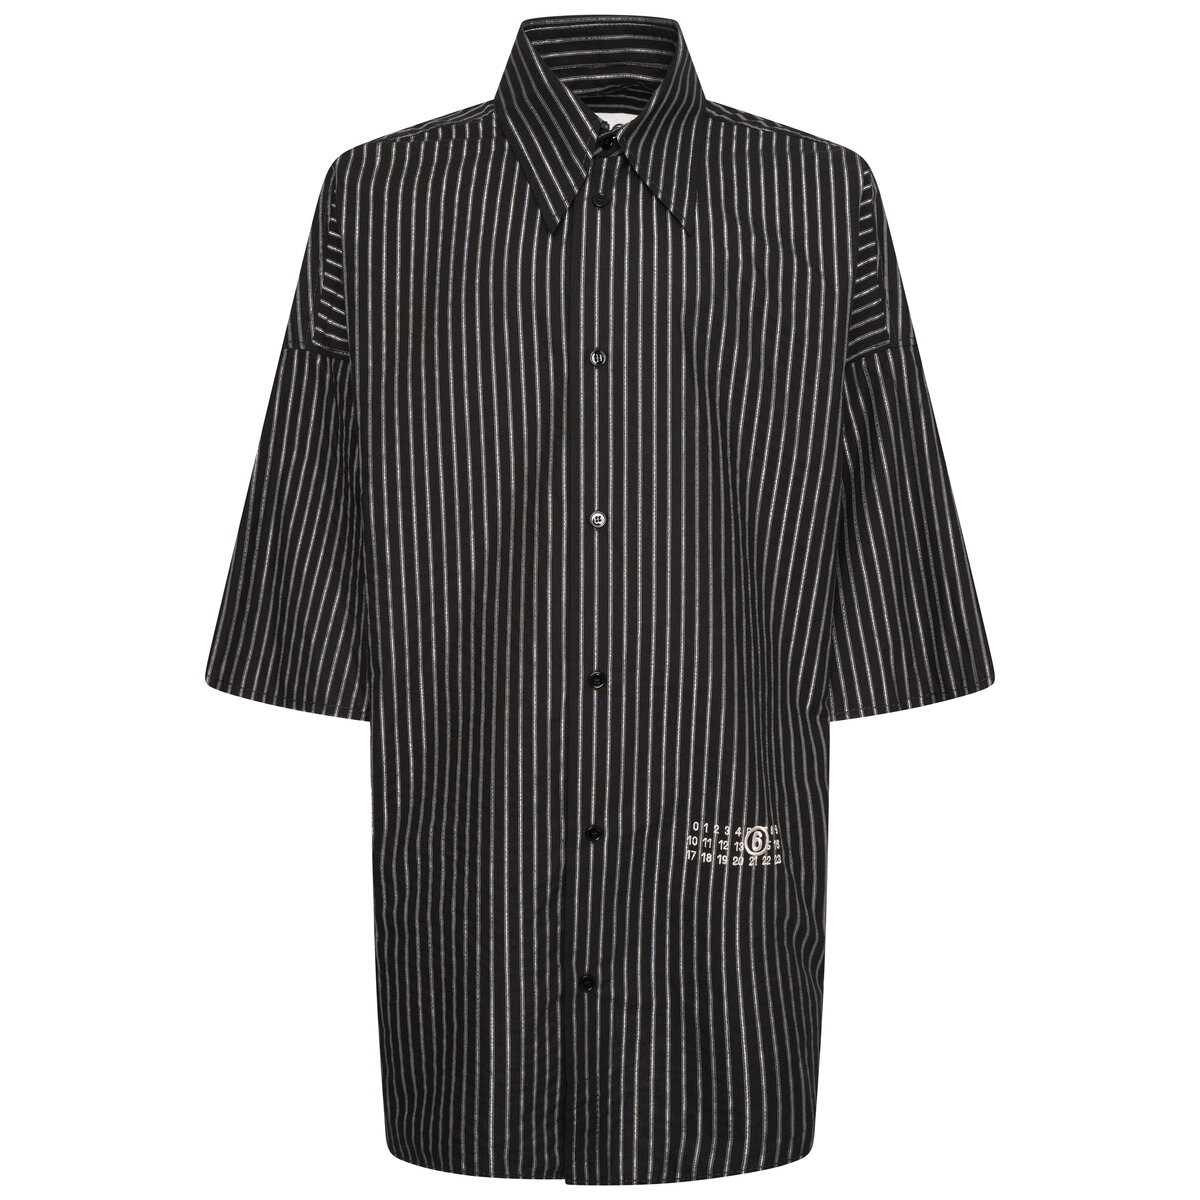 Jumbo Striped Shirt L Black